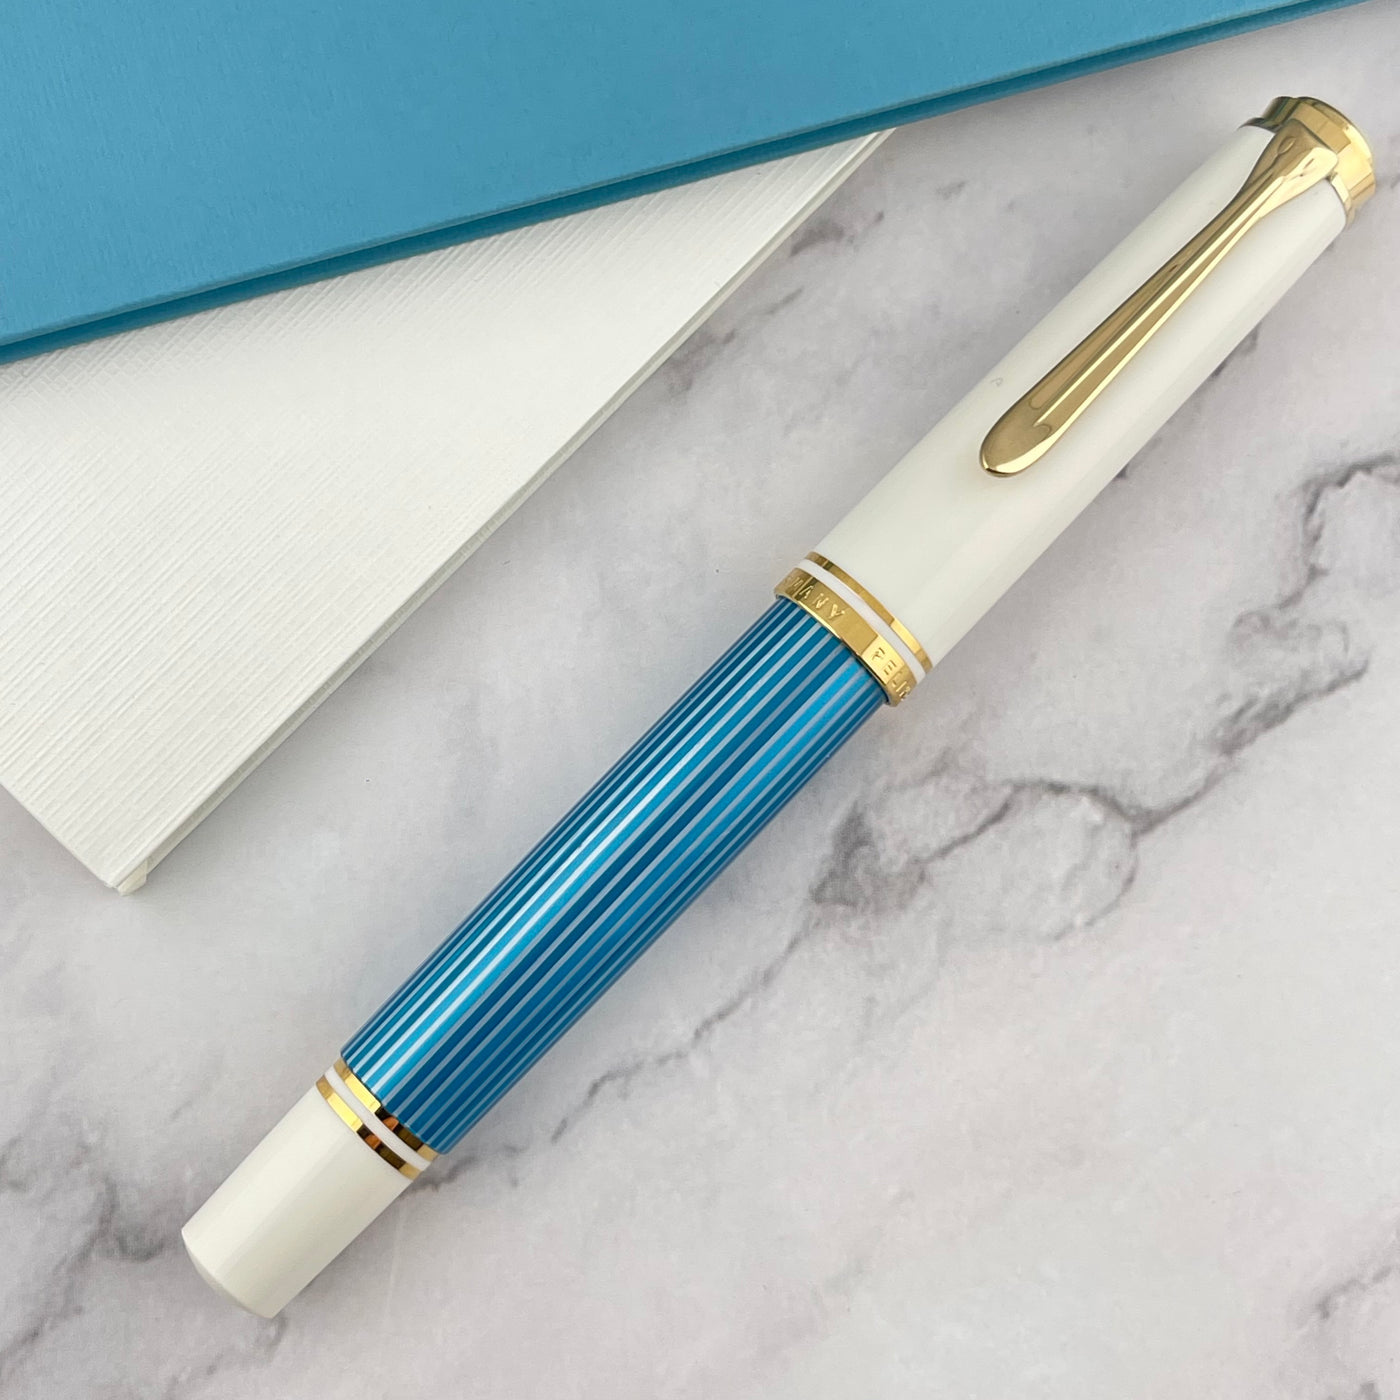 Pelikan Souveran M600 Fountain pen - Turquoise / White (Special Edition)